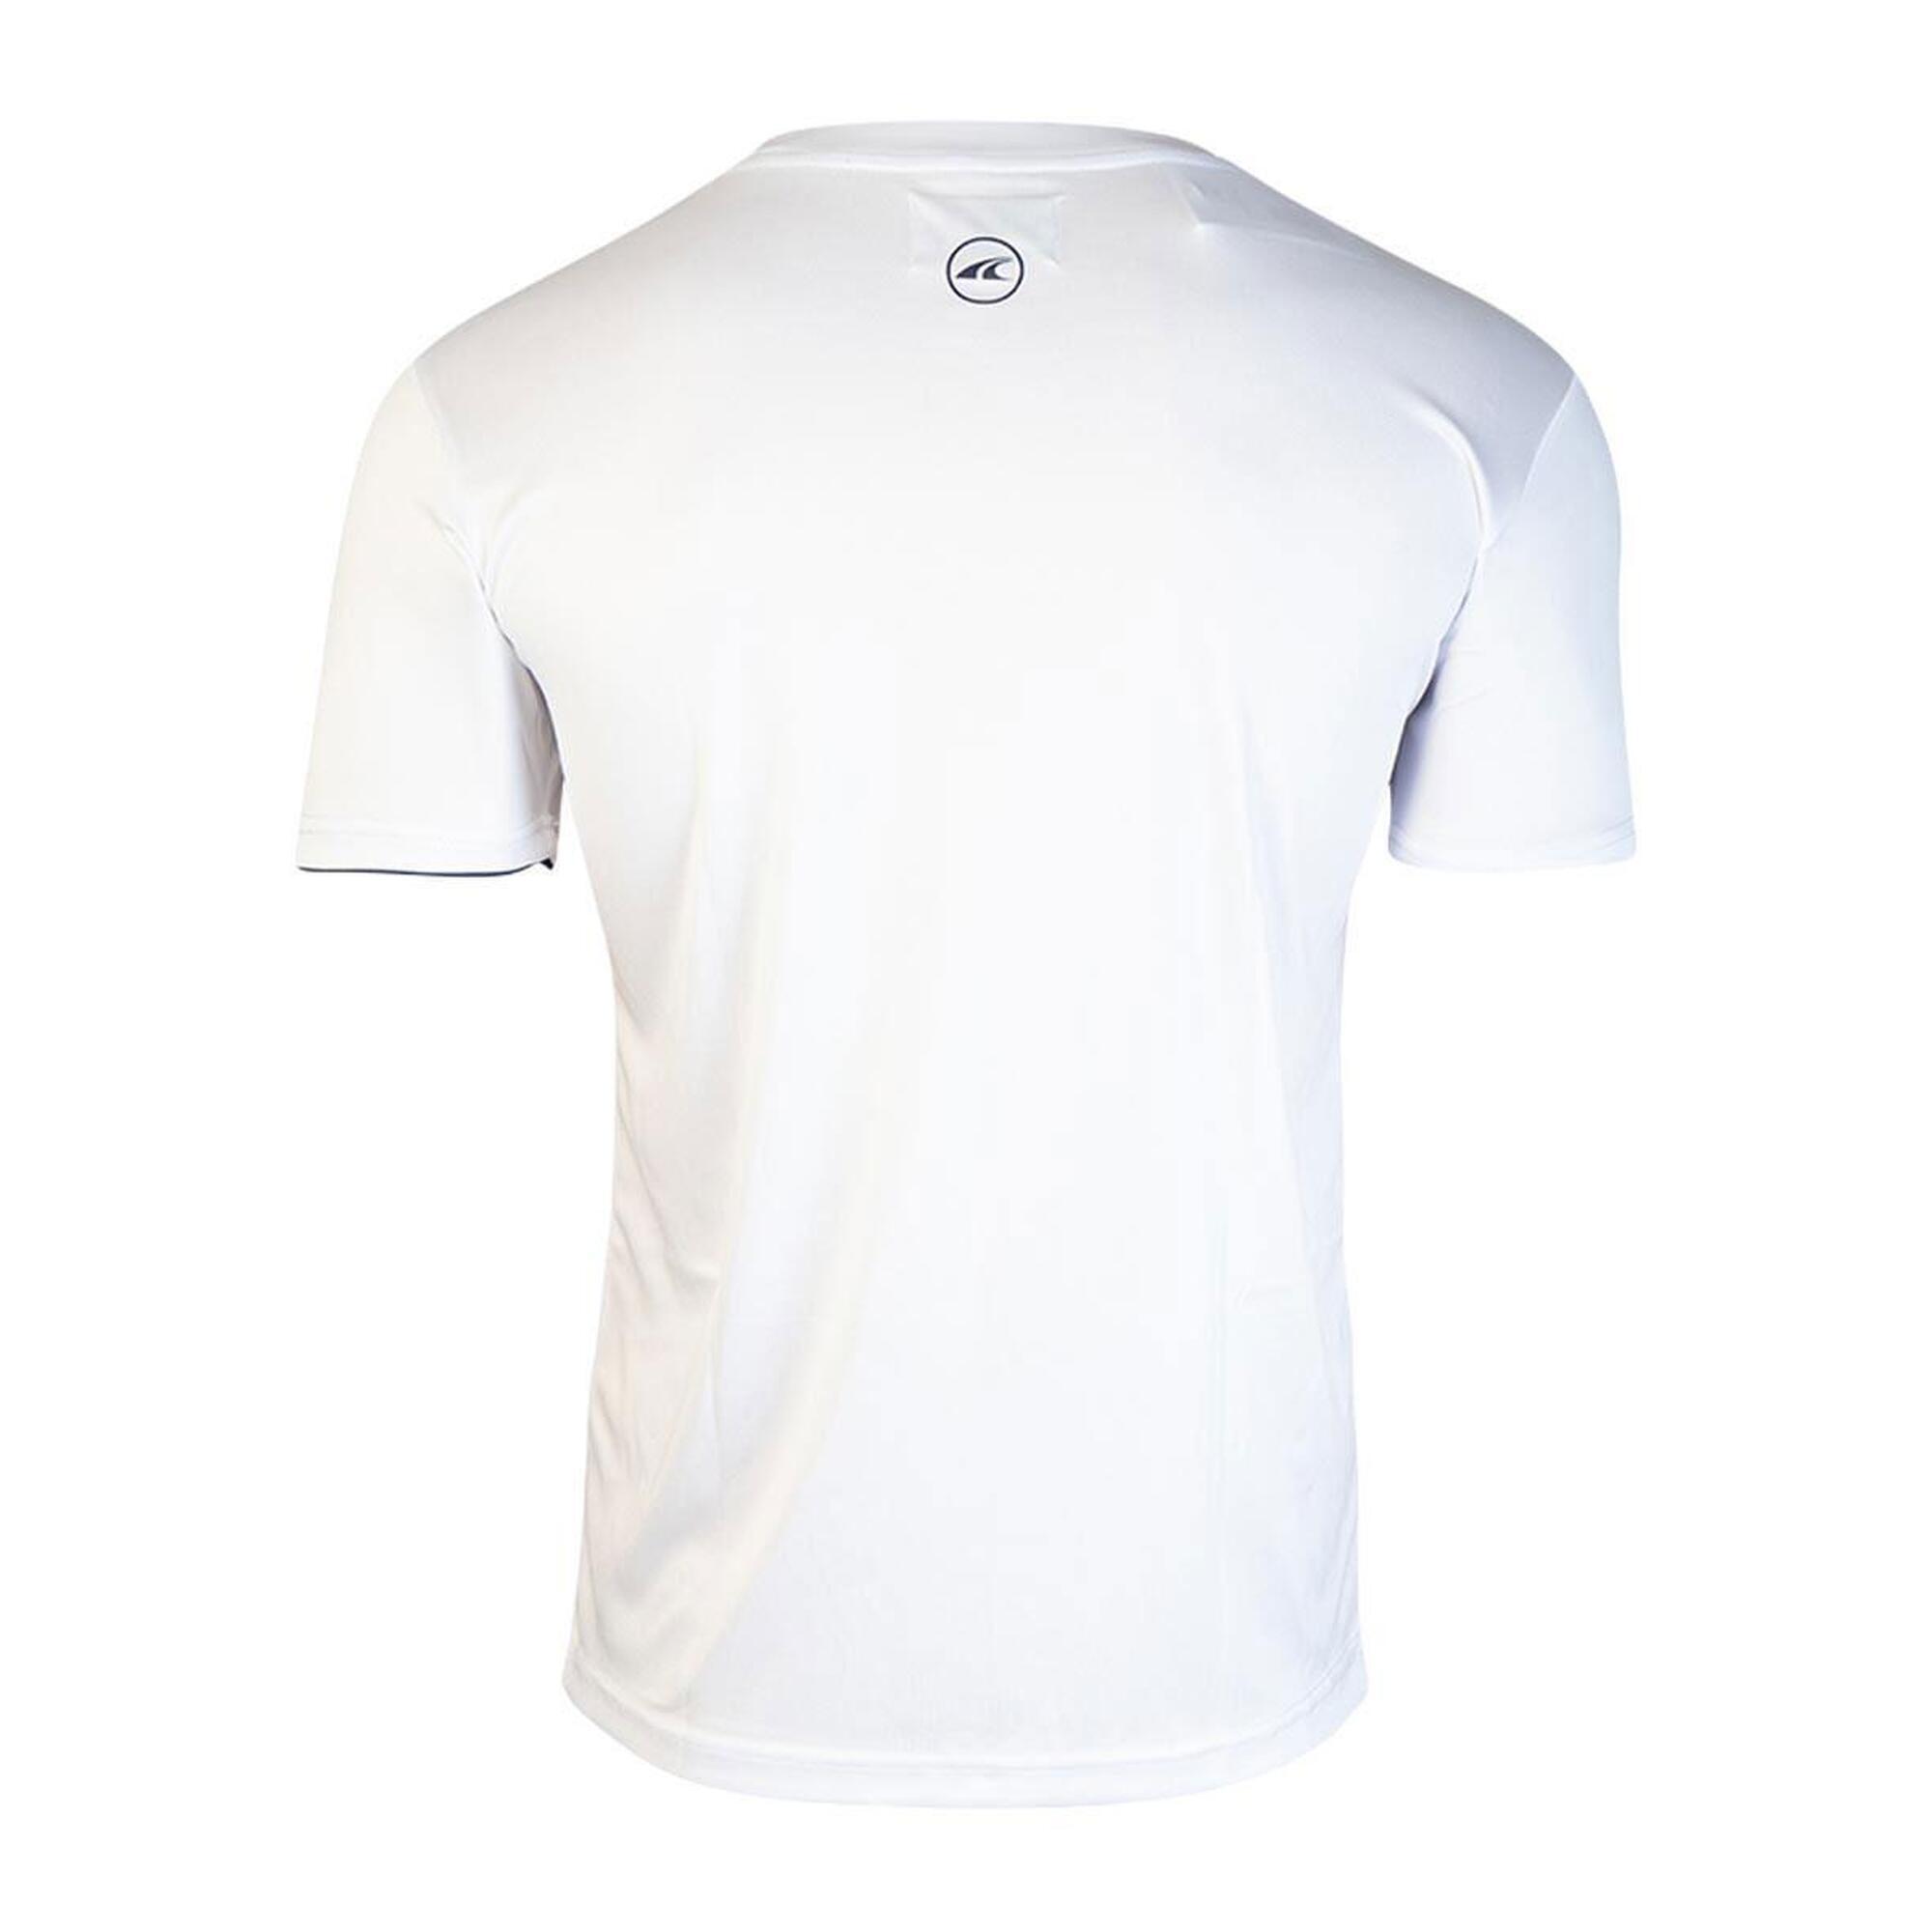 Akron Denis Technical T-shirt - White / Royal Blue 3/5